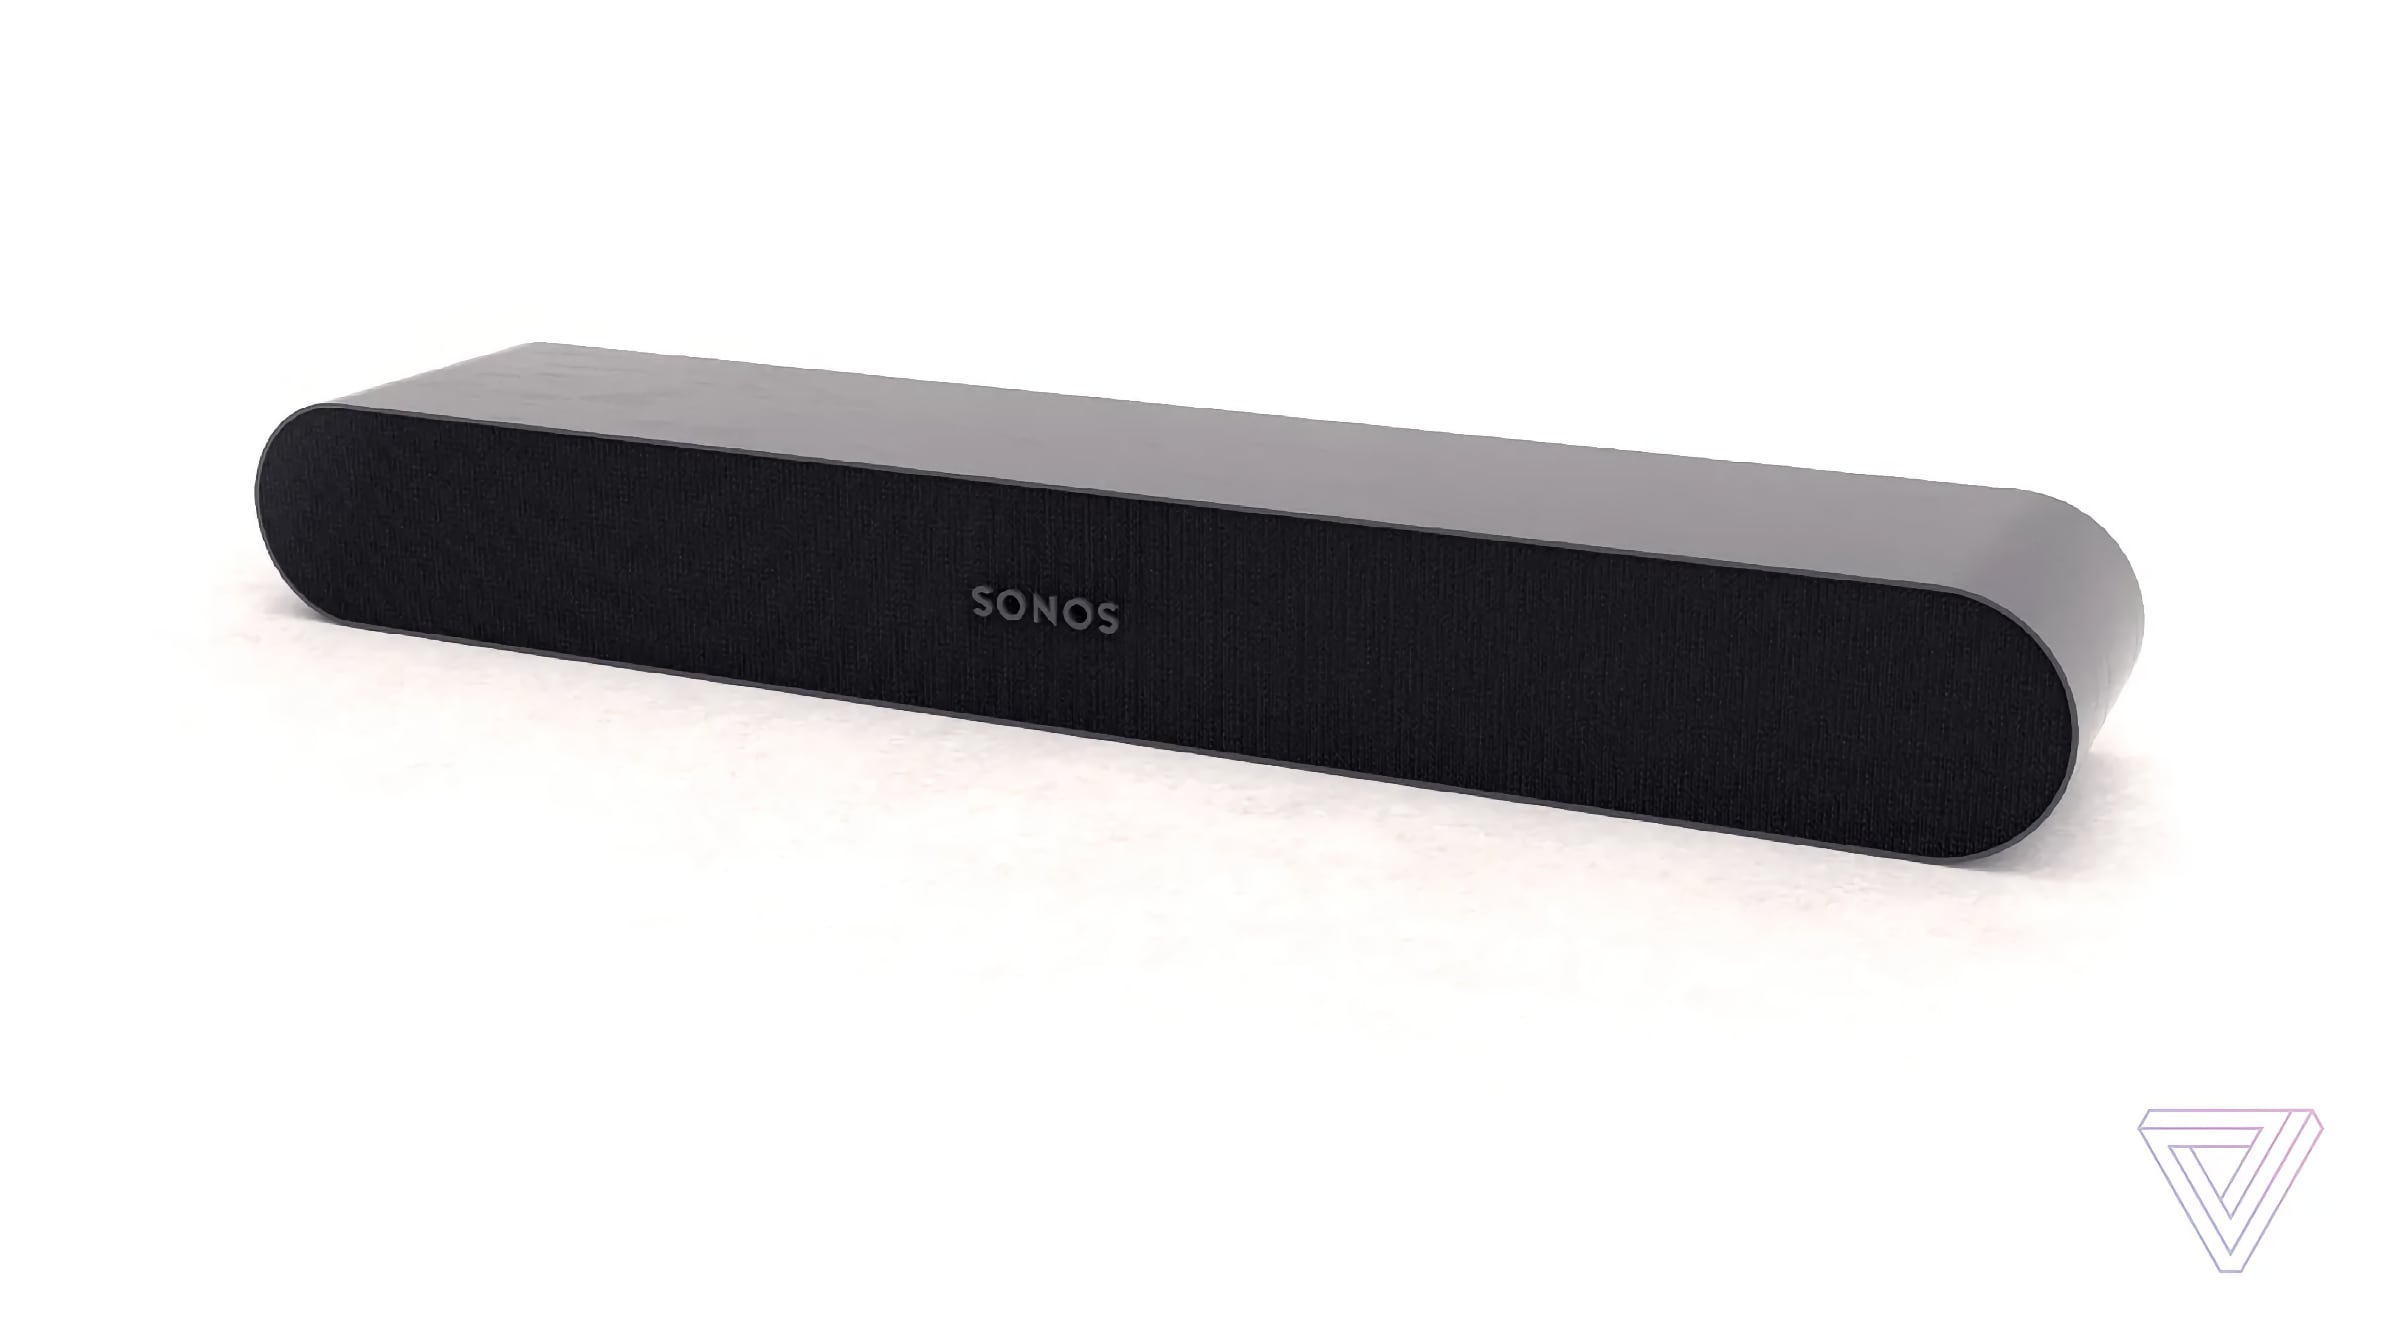 Ny billigere Sonos soundbar lækket FlatpanelsDK